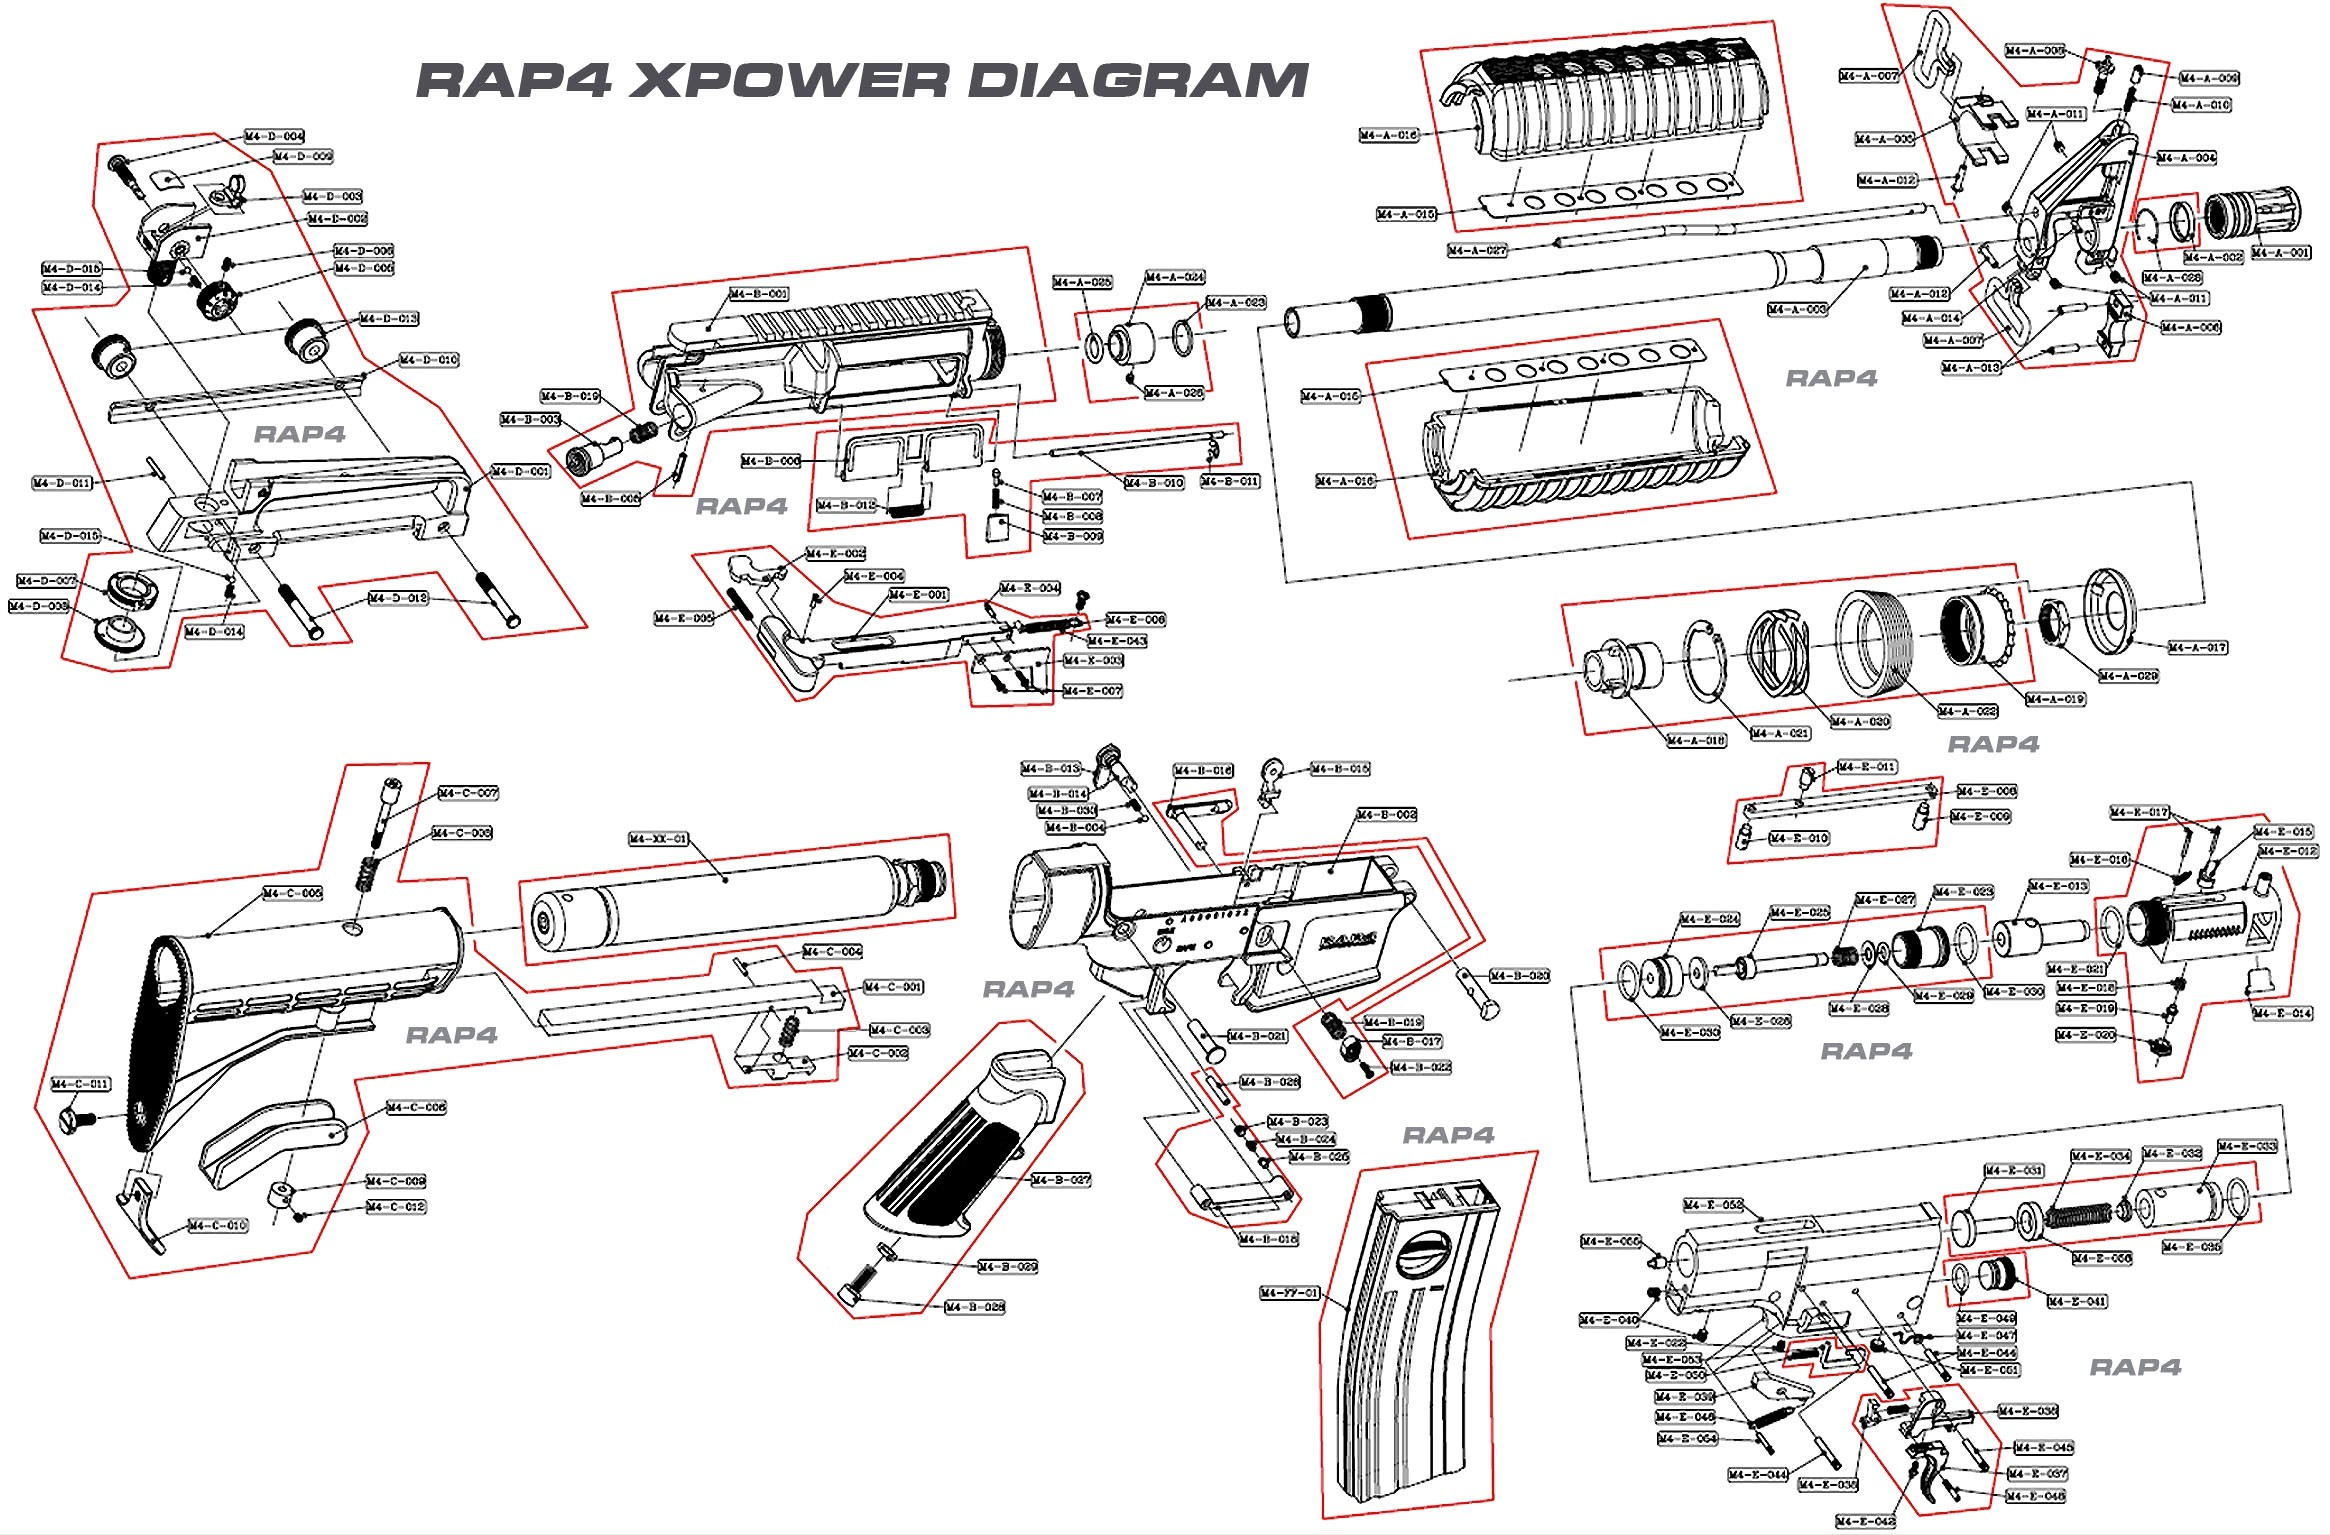 Car Exterior Parts Diagram 2018 Chevrolet Performance Parts Catalog Beautiful Chevy Van Parts Of Car Exterior Parts Diagram